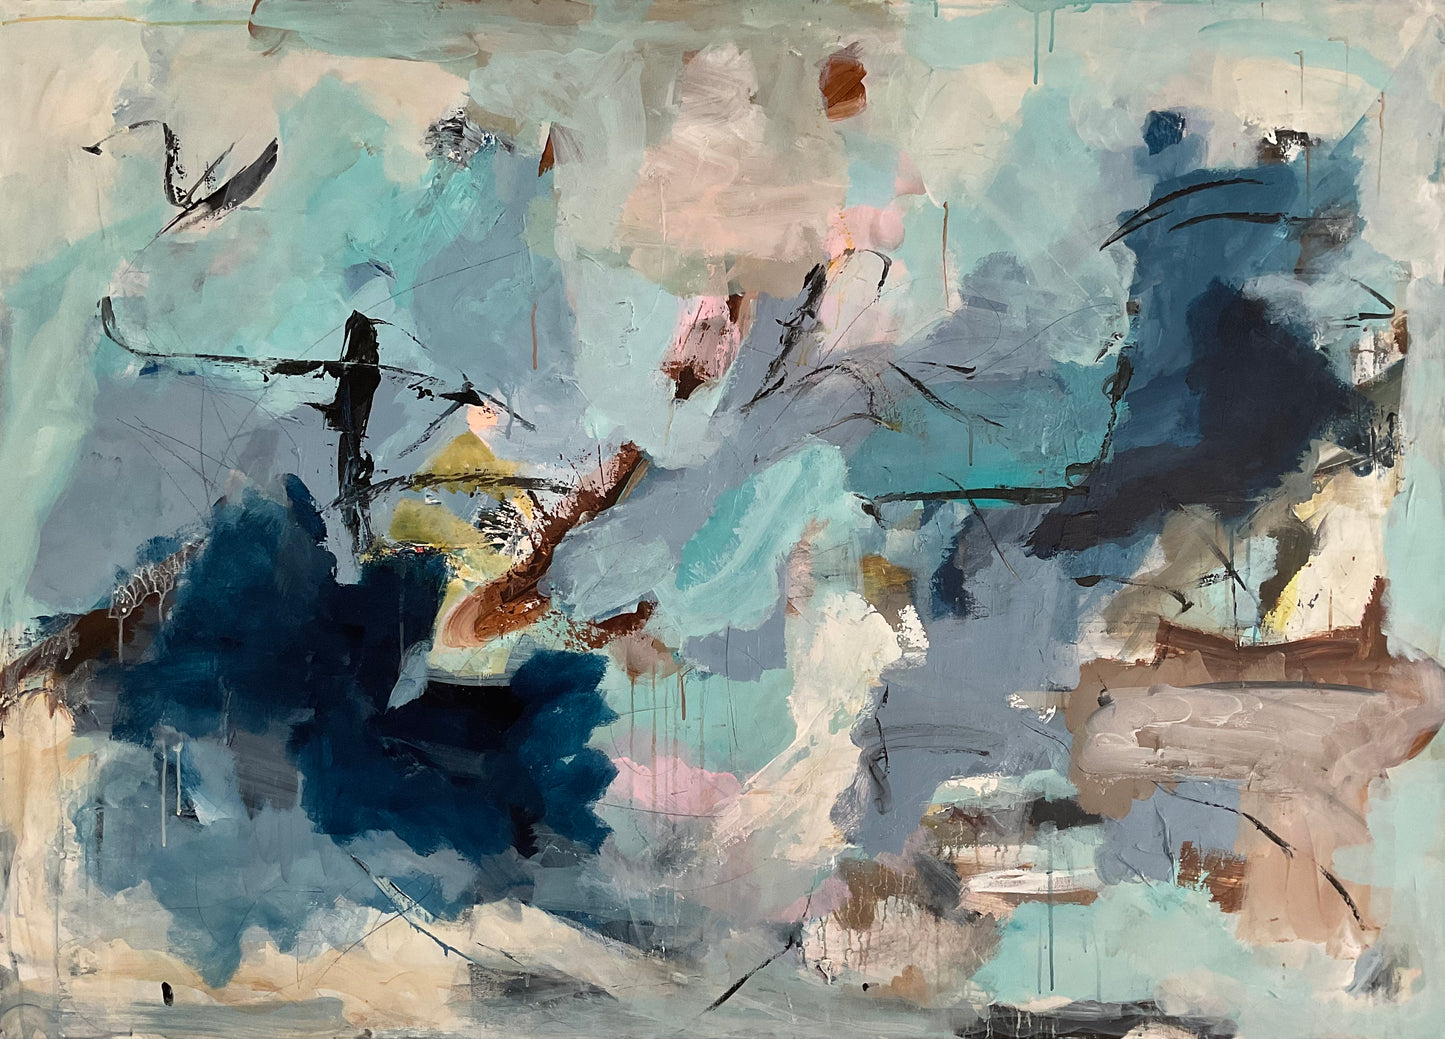 Abstrakt maleri, 100x140 cm, "Dreamcatcher" by Lone Reedtz , Abstrakt ekspressivt akrylmaleri på lærred